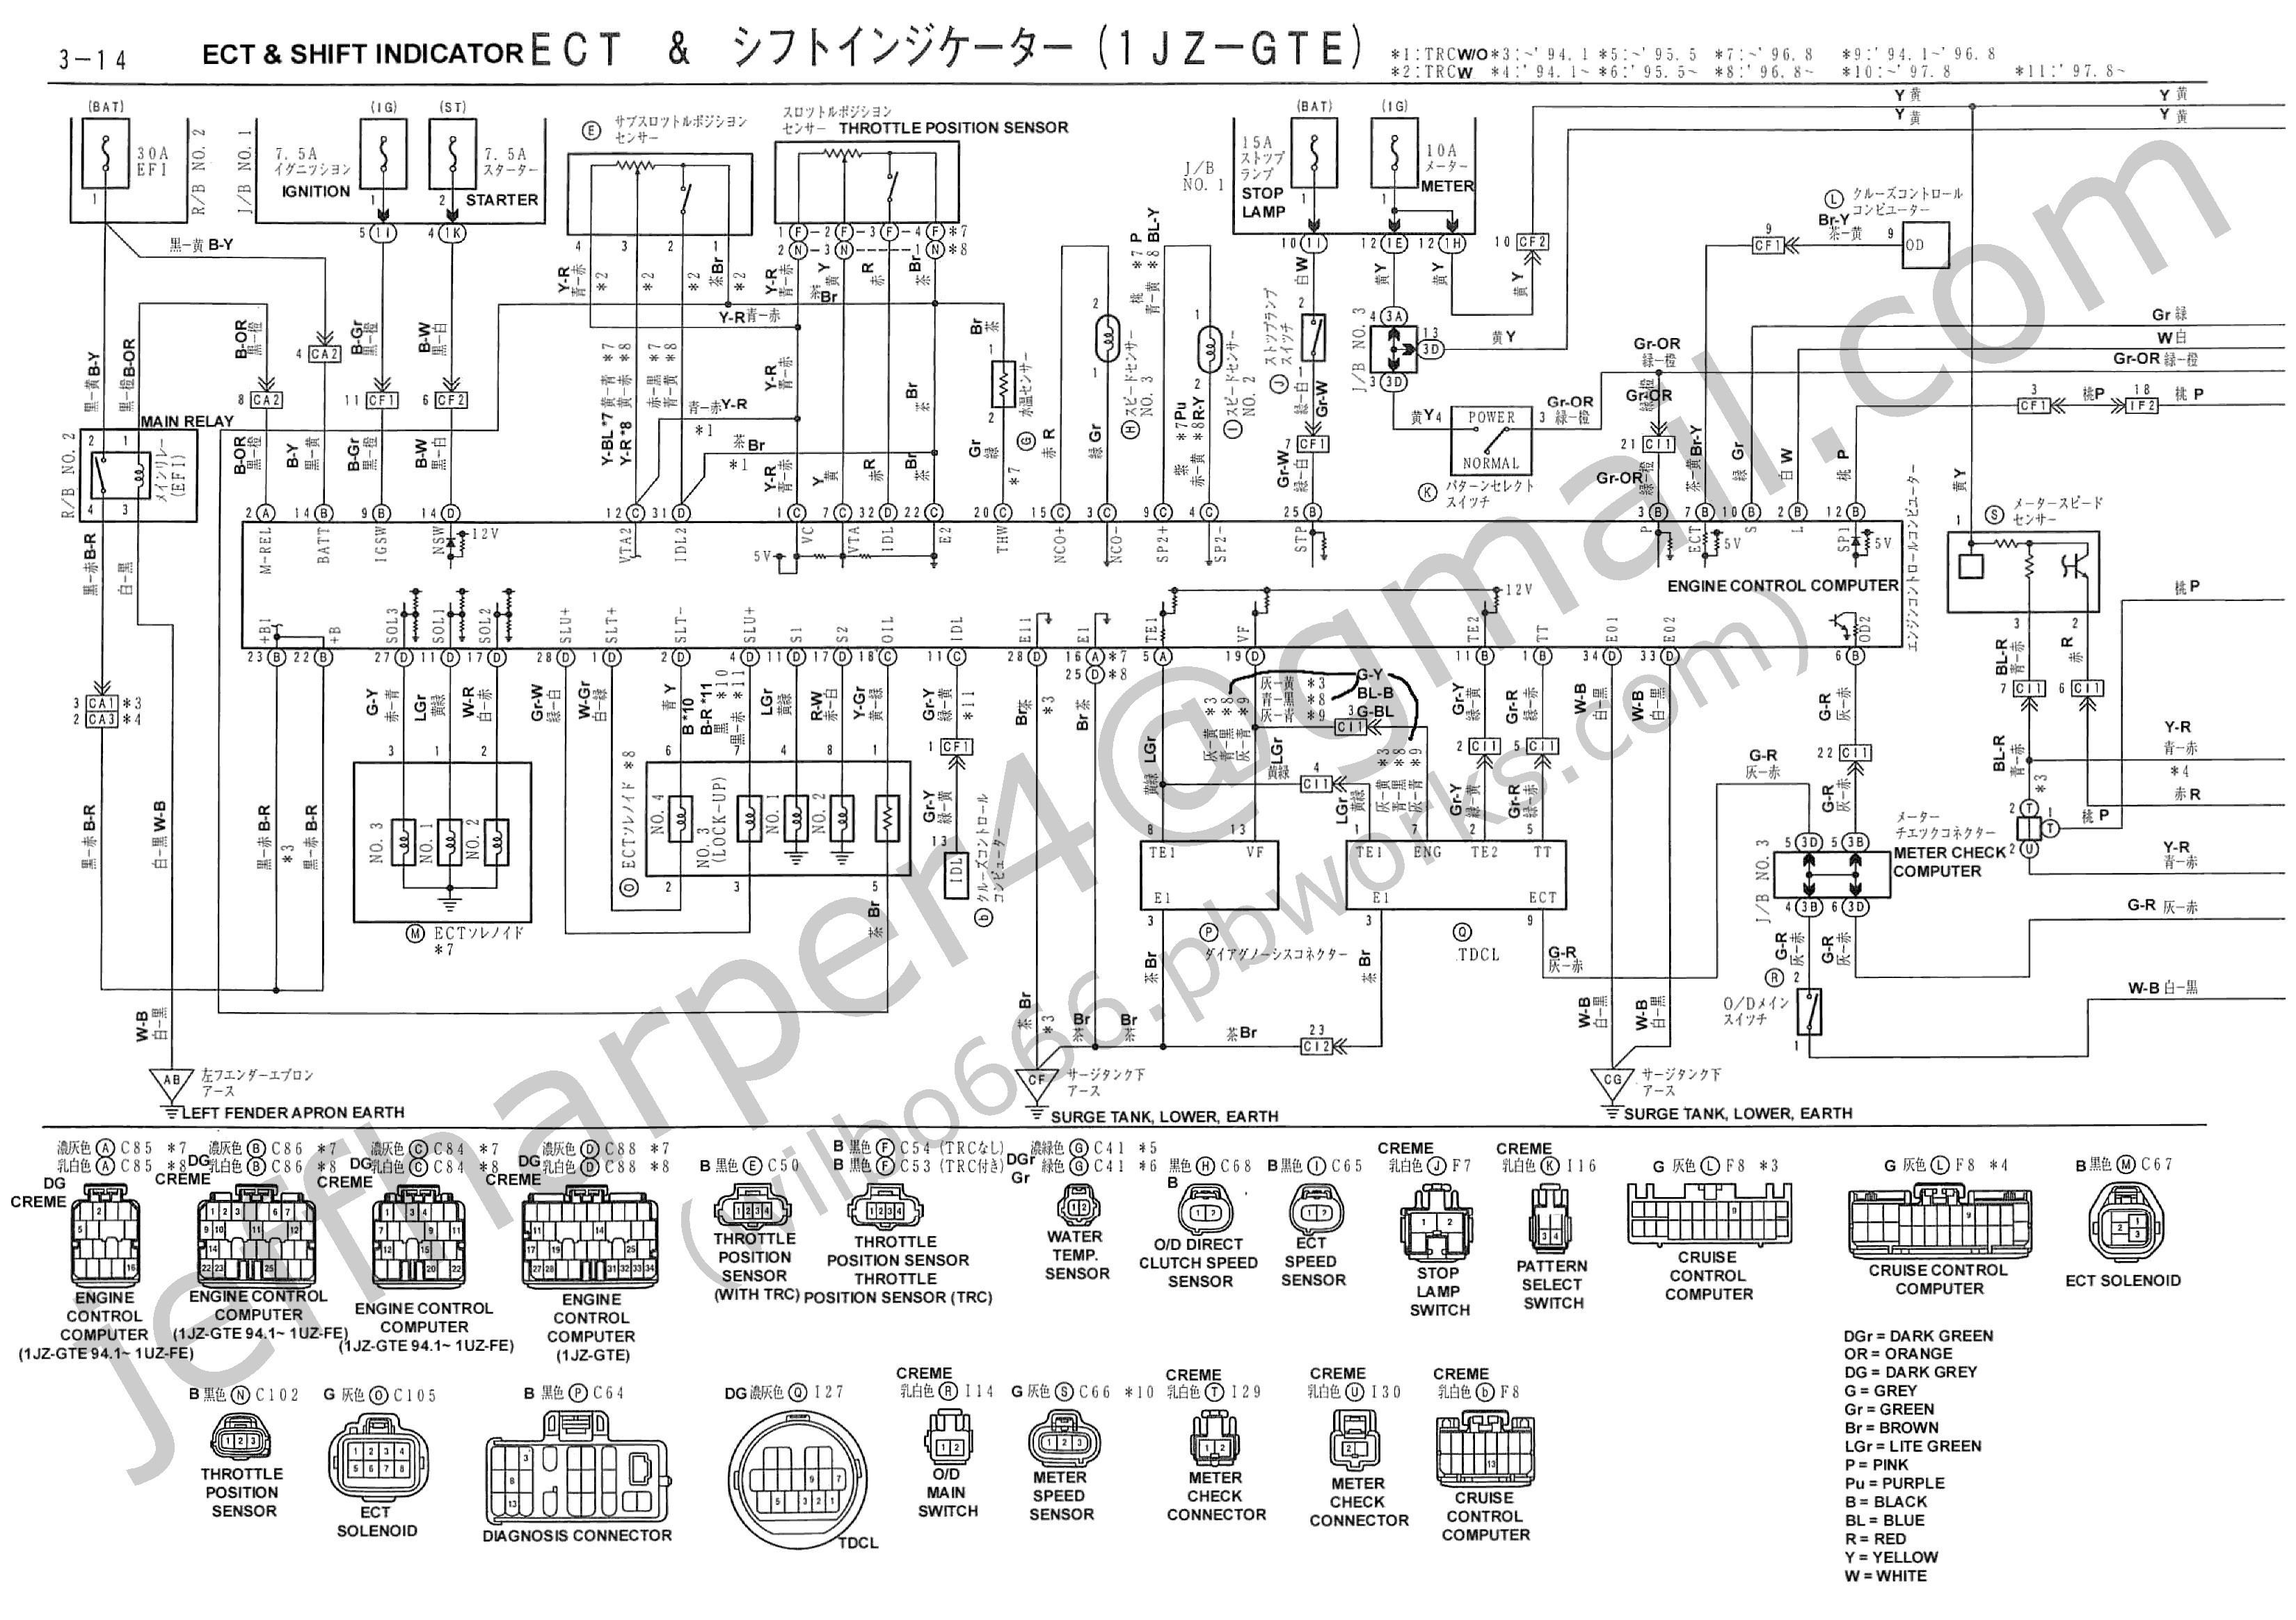 1jz Engine Wiring Diagram Wilbo666 1jz Gte Jzz30 soarer Engine Wiring Of 1jz Engine Wiring Diagram